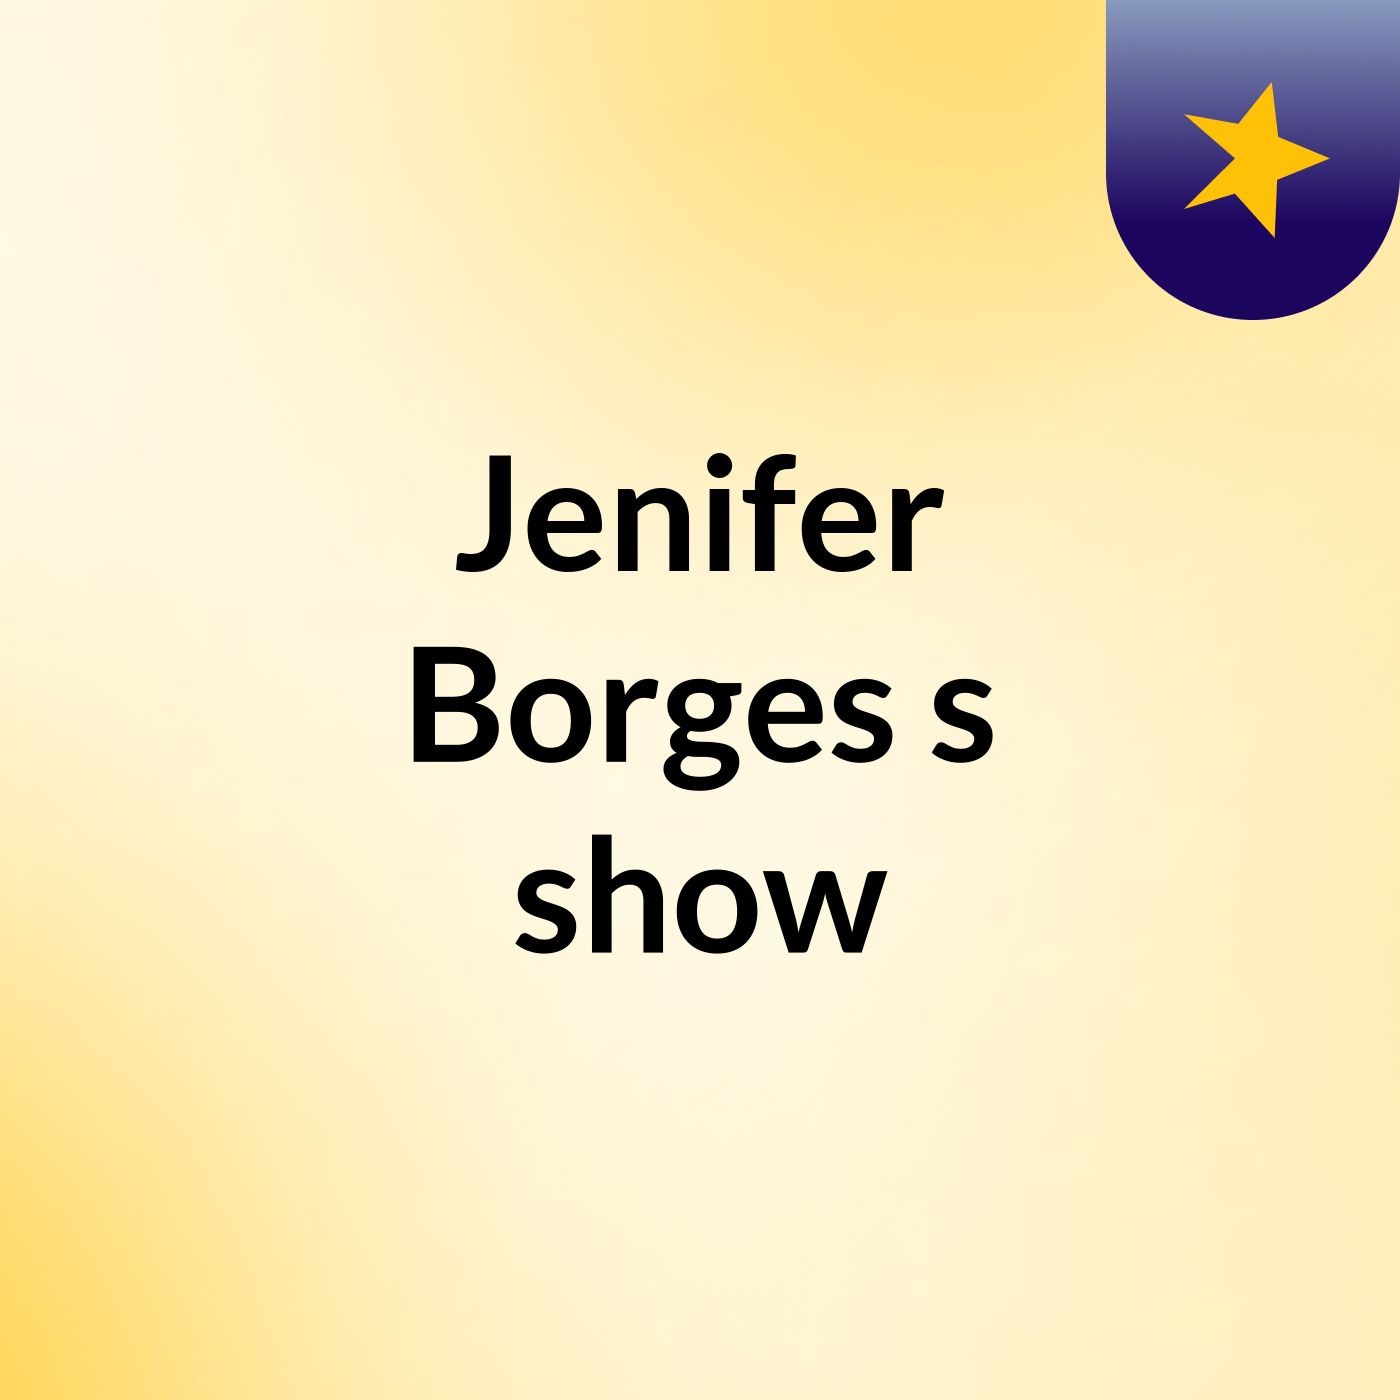 Jenifer Borges's show